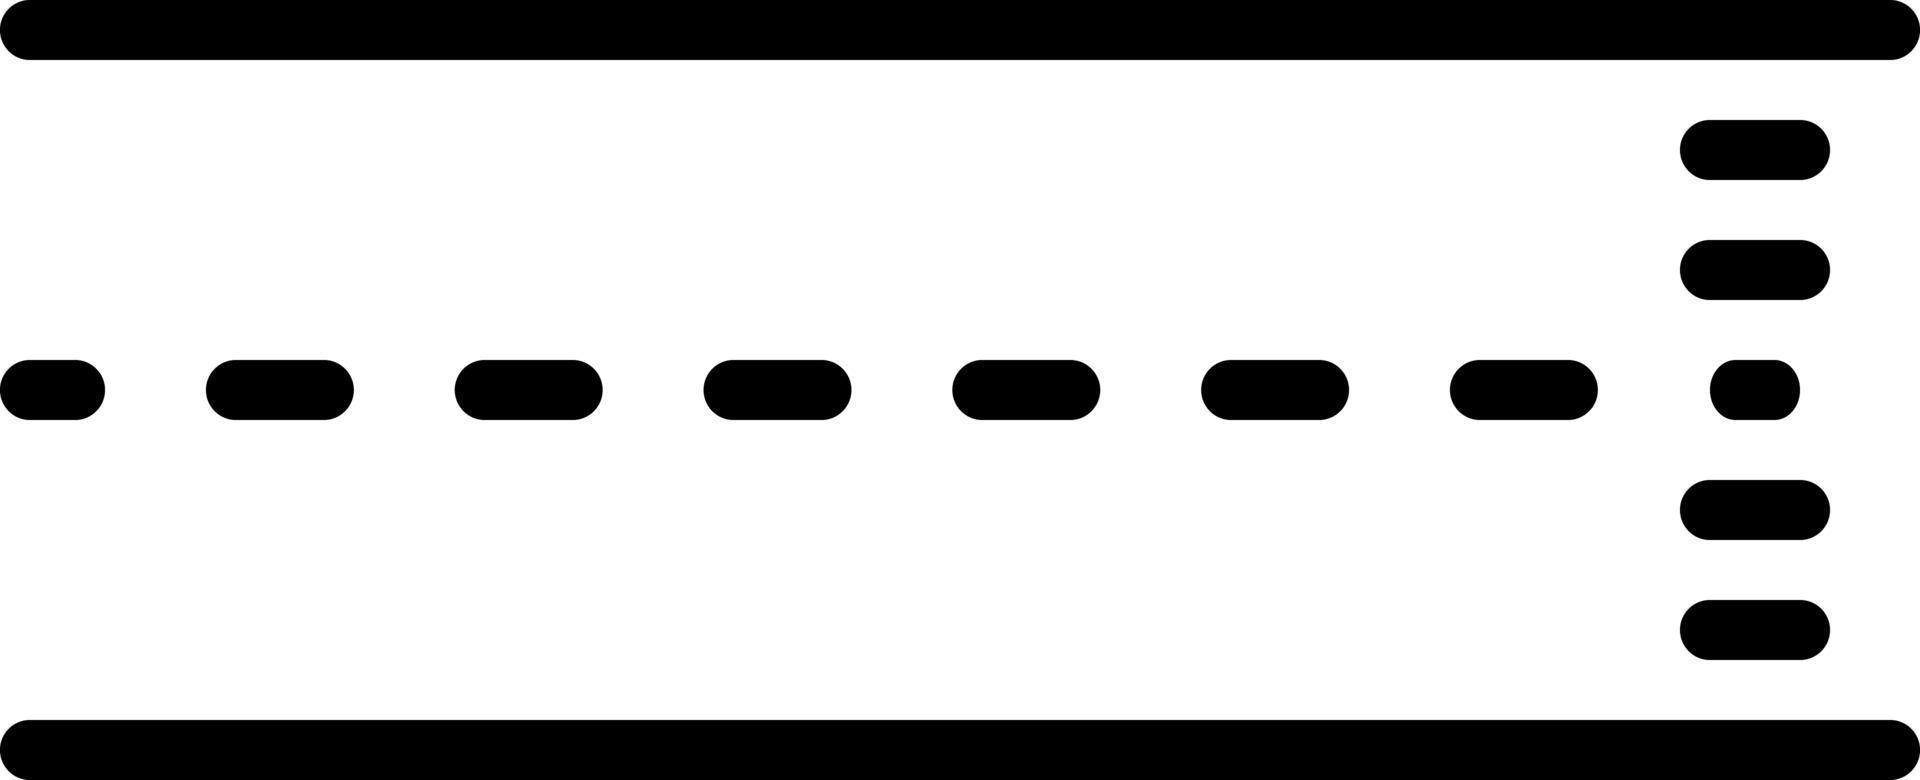 Liniensymbol für Linie vektor